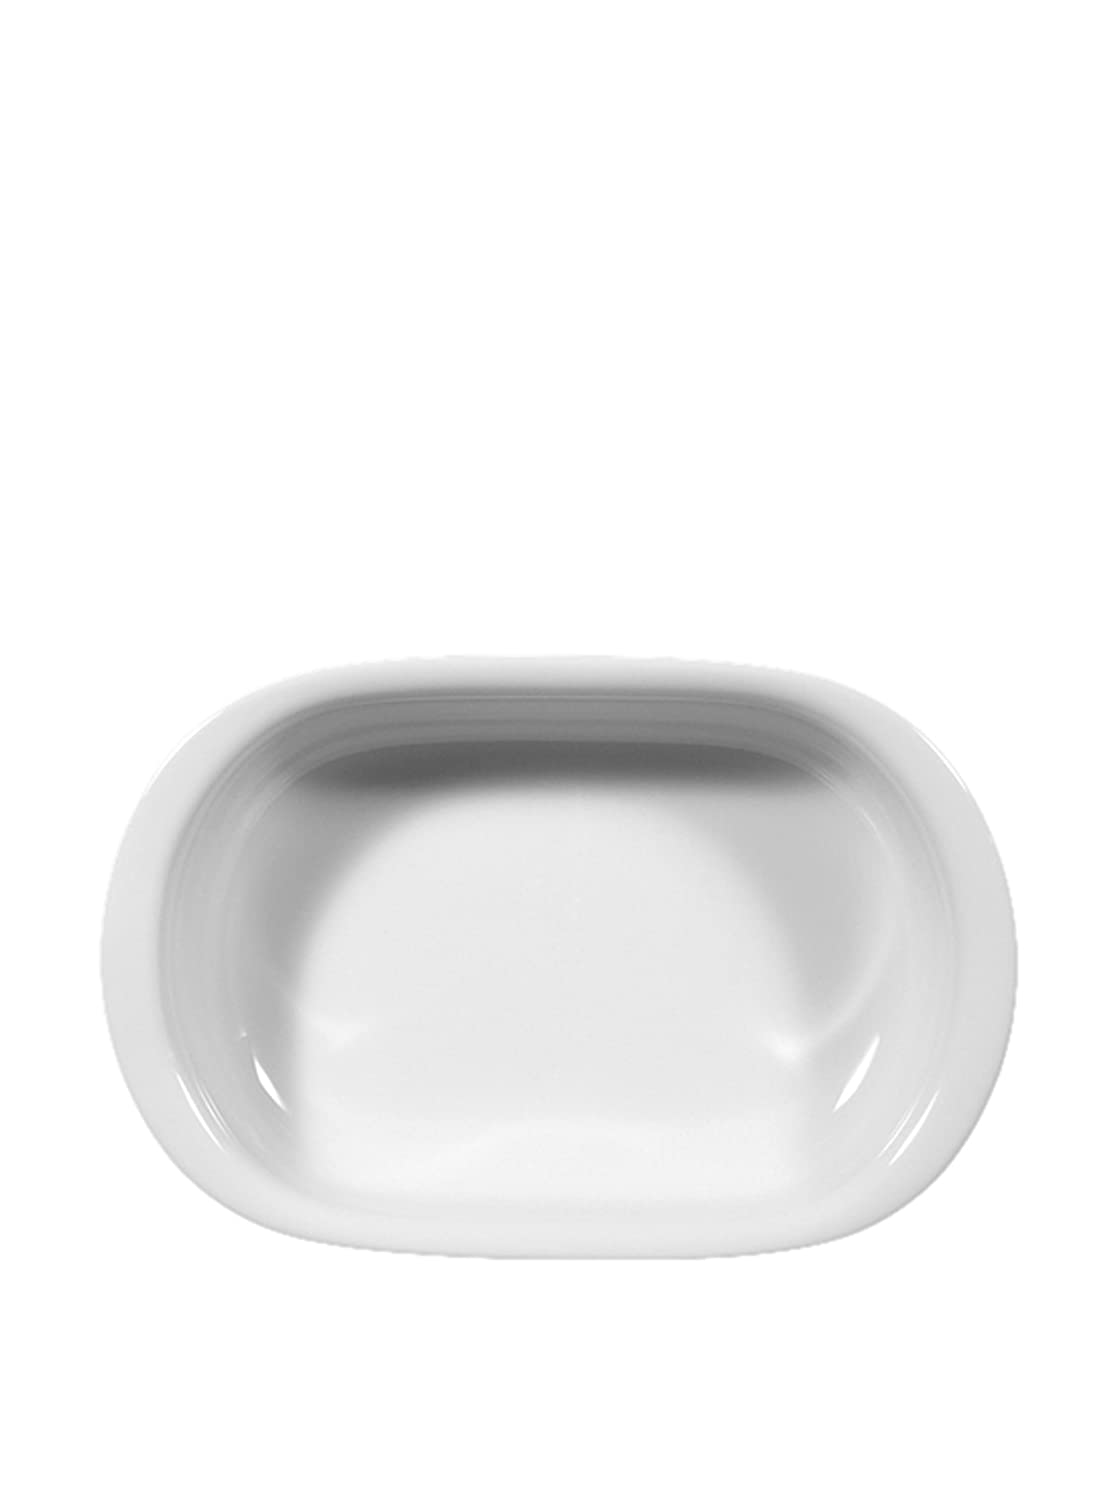 Seltmann Weiden Seltmann Lukullus 001.103257 Porcelain Roasting Dish, White, Oval, 22 cm x 14.5 cm